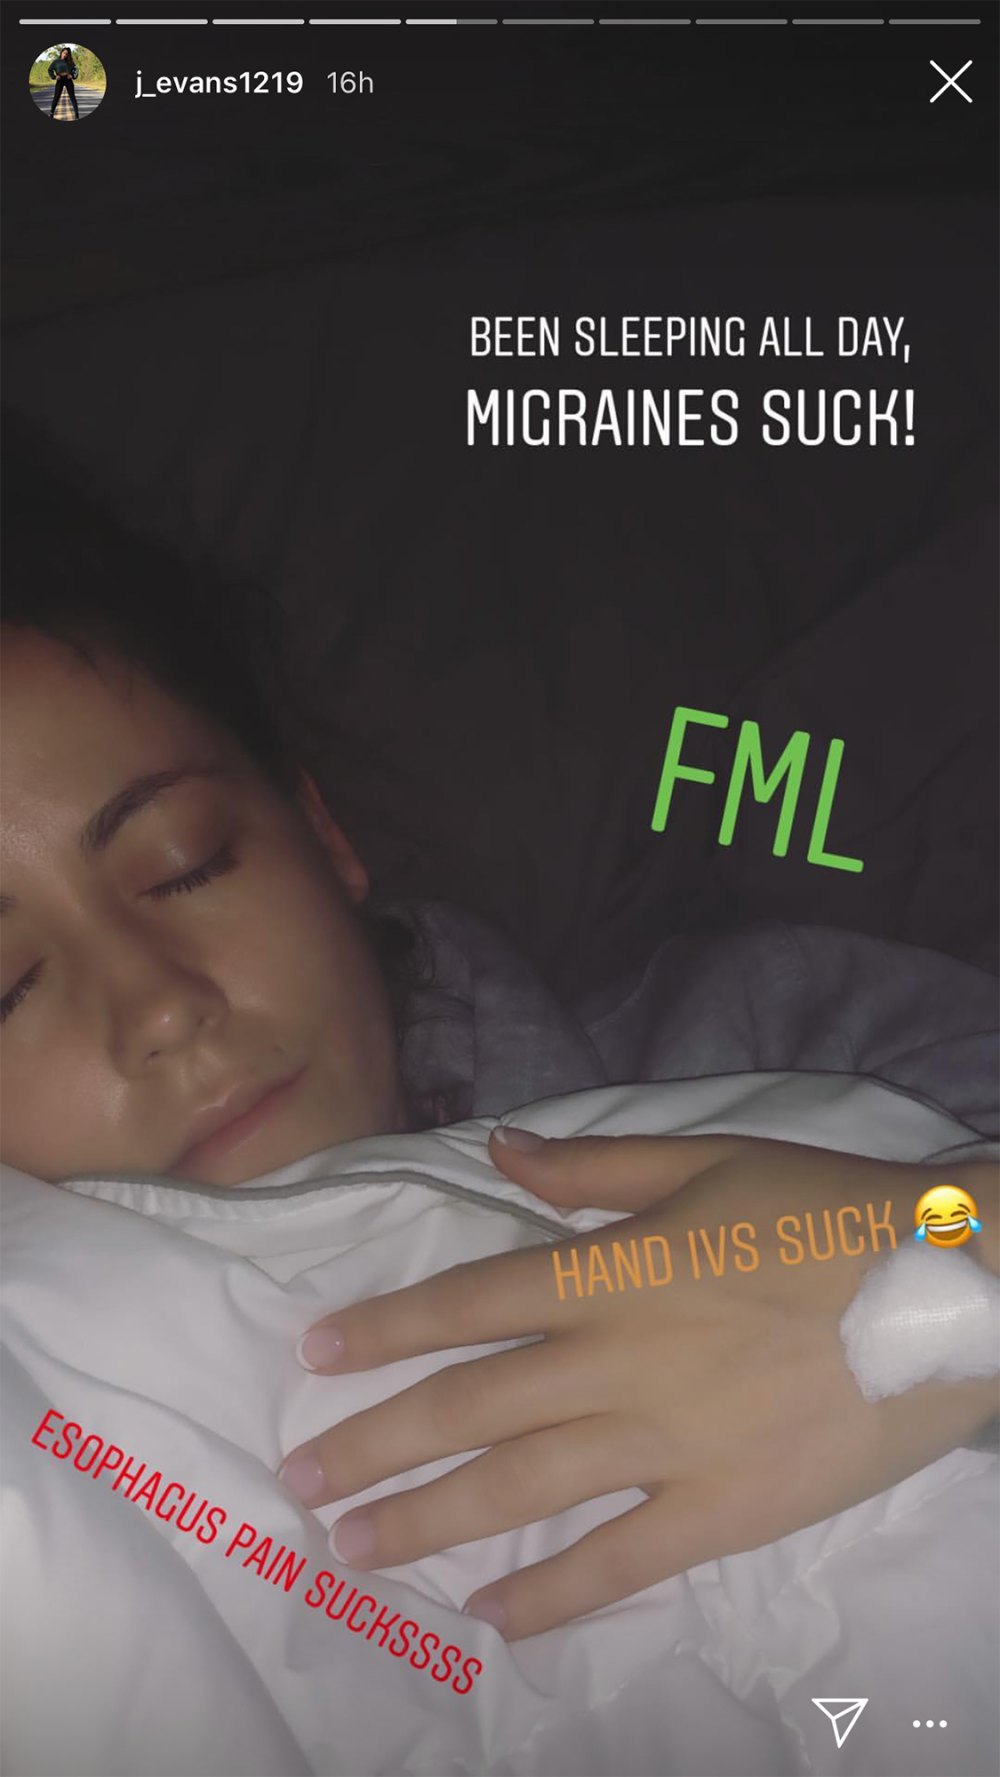 Jenelle Evans Reveals Multiple Pains After Hospitalization: 'Hand IVs Suck'